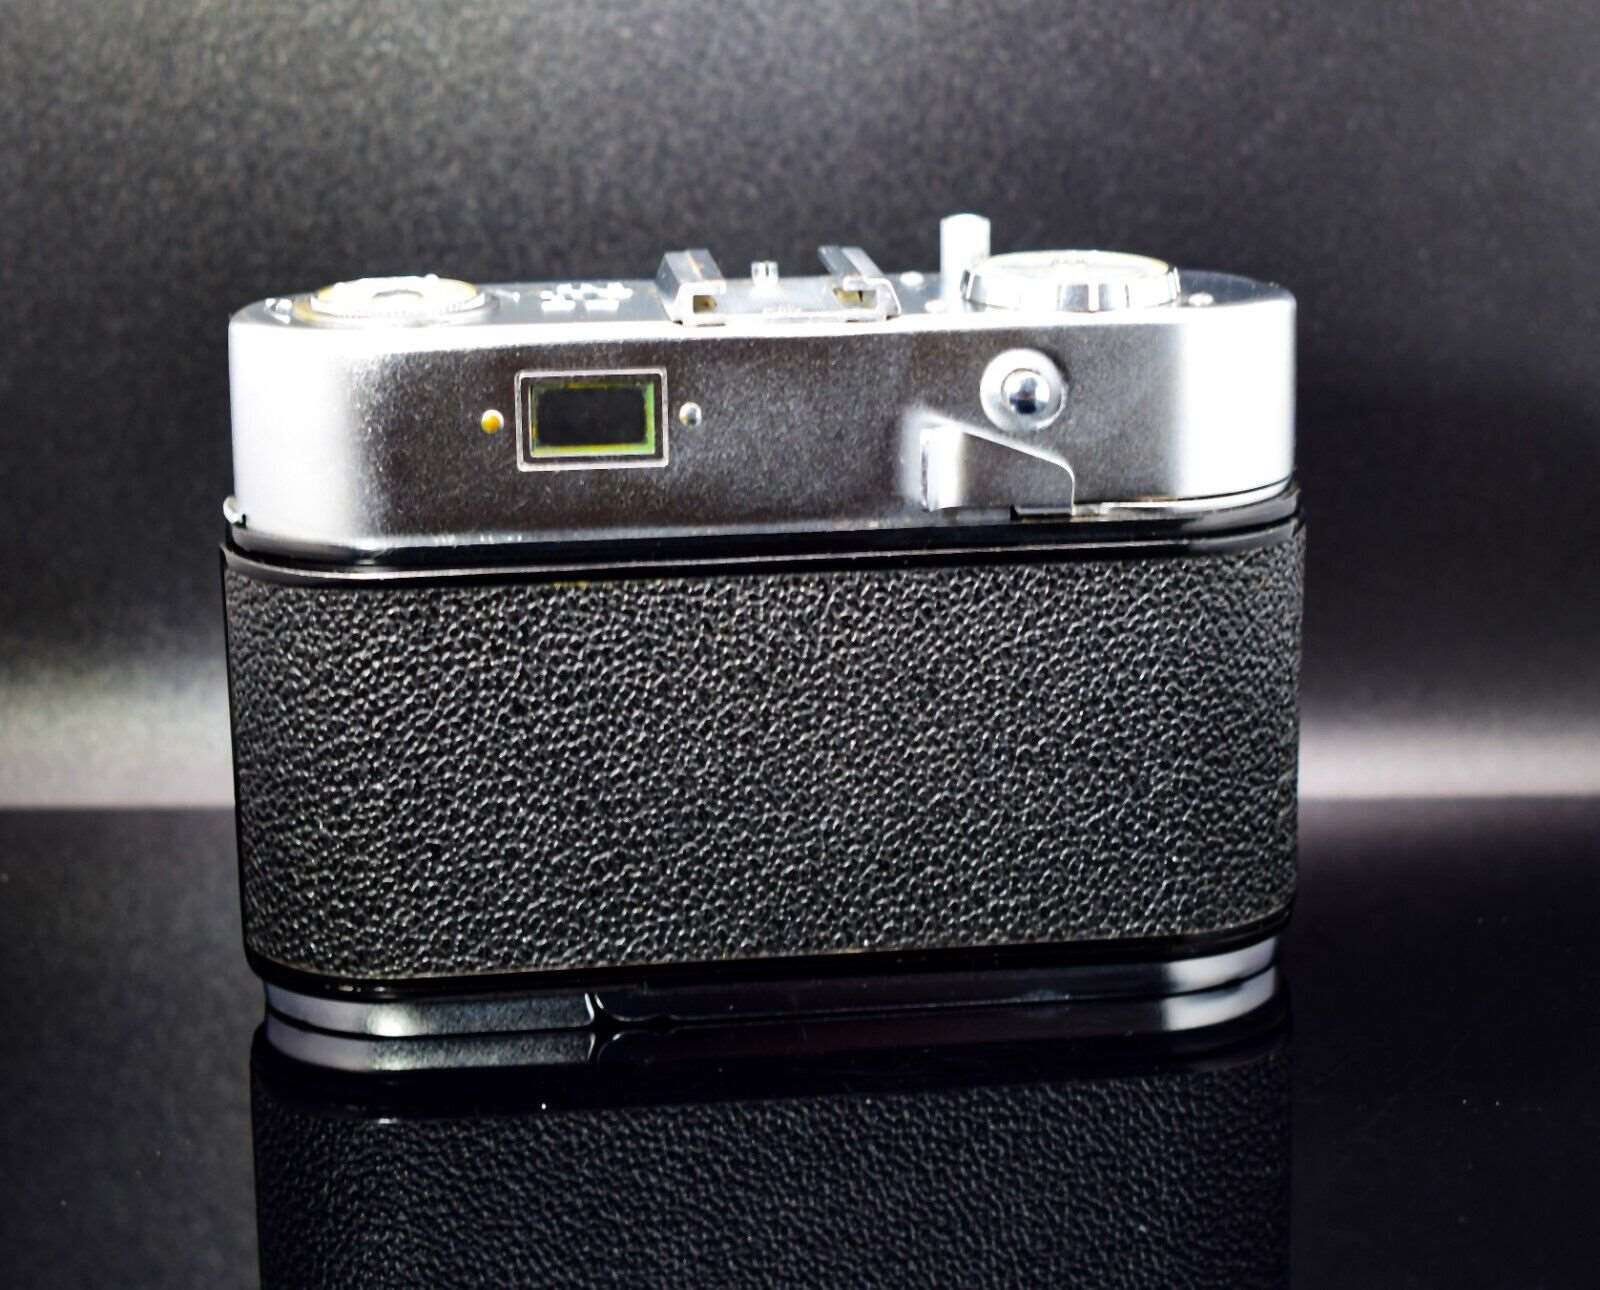 Voigtlander VITO BL 35mm Film Camera with Color Skopar Lens Prontor SVS Shutter